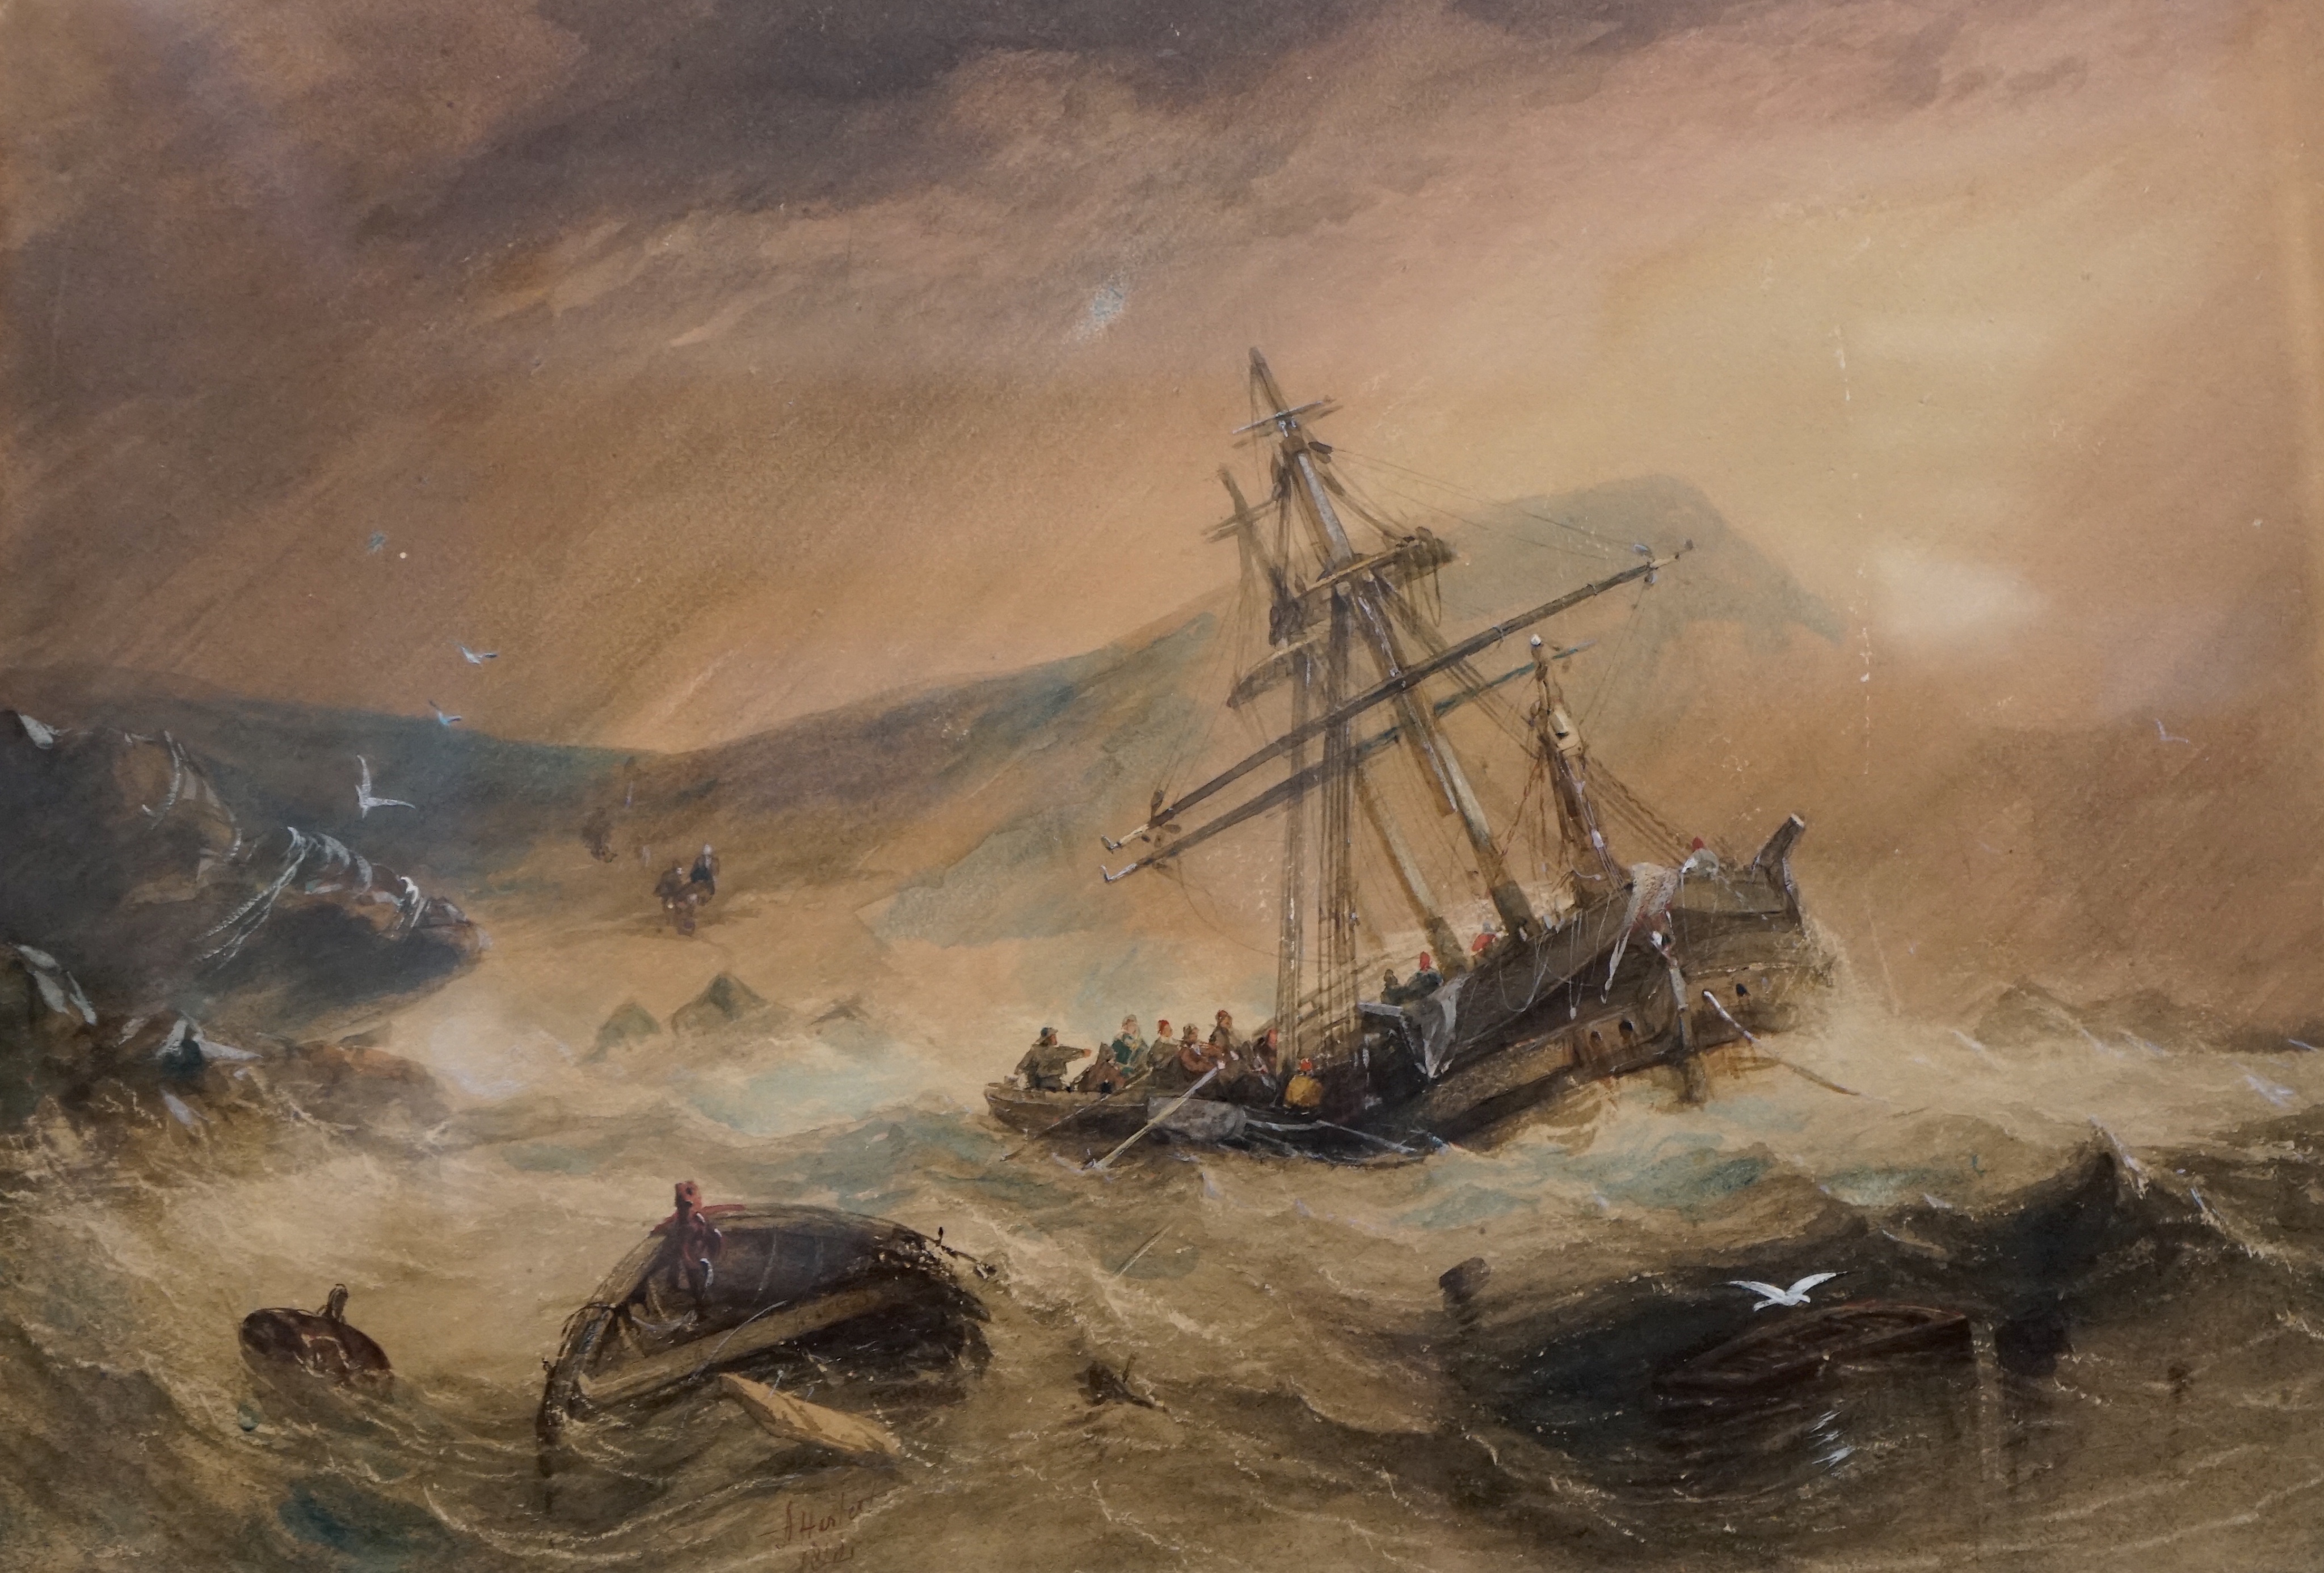 Alfred Herbert (1818-1861), 'The Ship Wreck', watercolour, 33 x 49cm